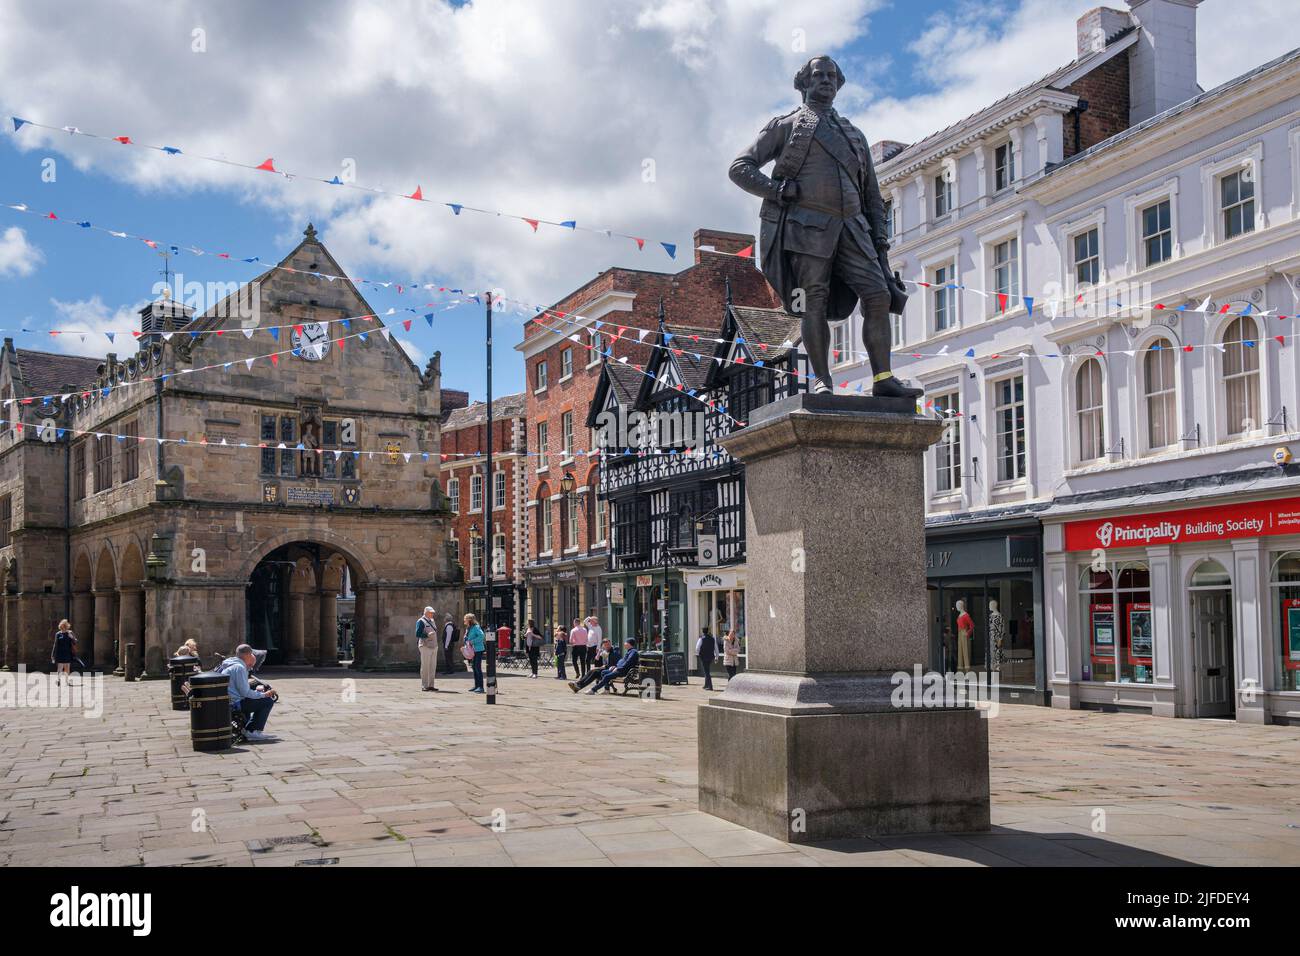 Shrewsbury Square and the statue of Clive of India, Shrewsbury, Shropshire Stock Photo